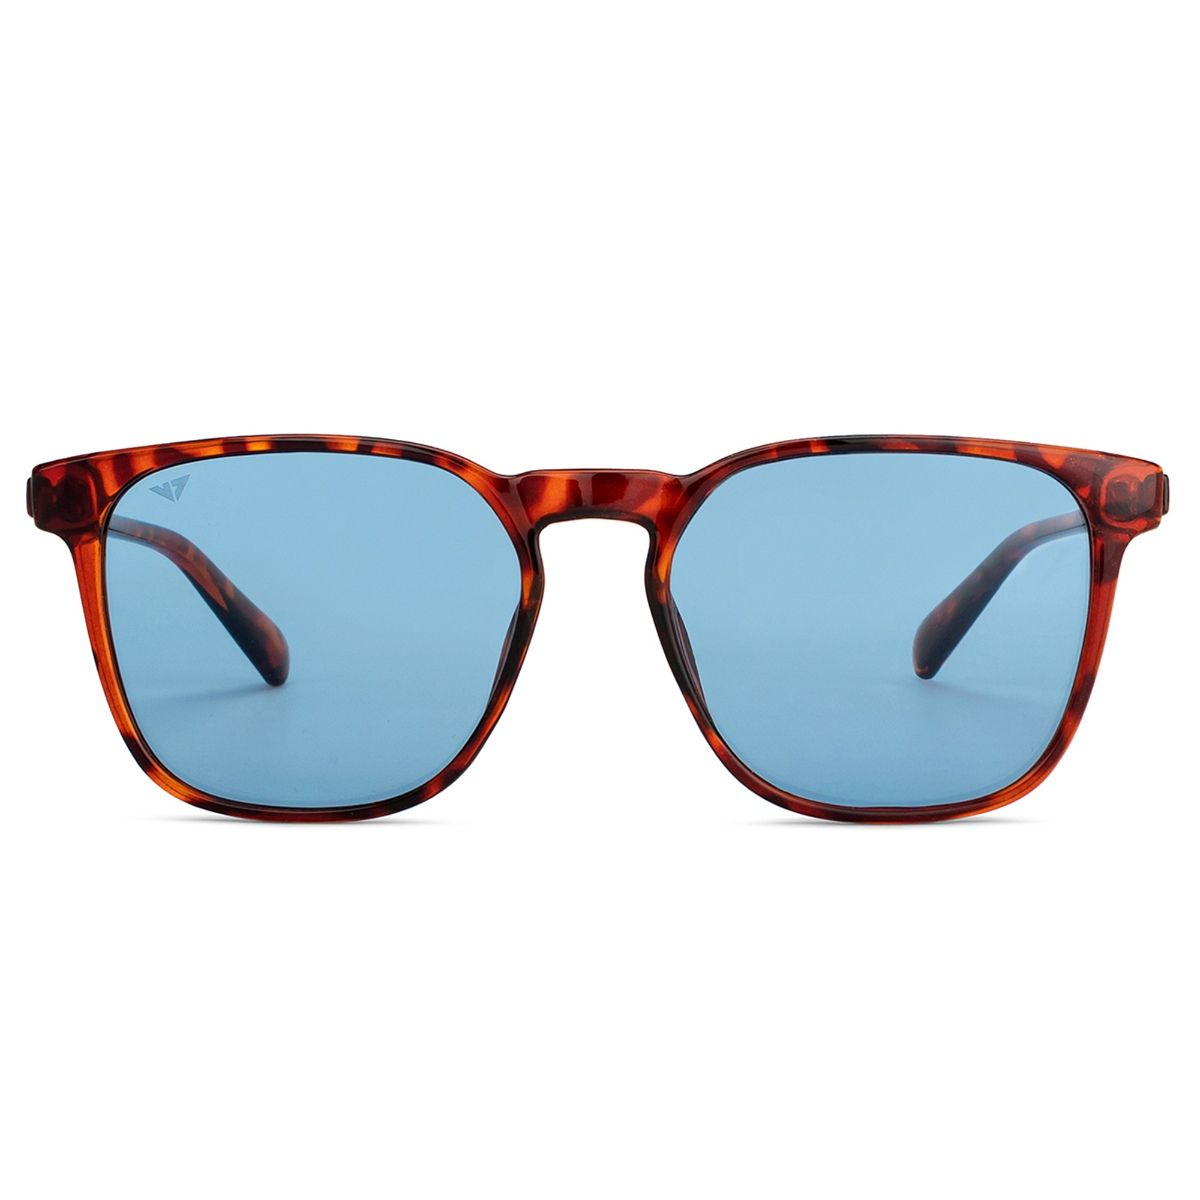 Buy Grey Sunglasses for Men by Lenskart Boost Online | Ajio.com